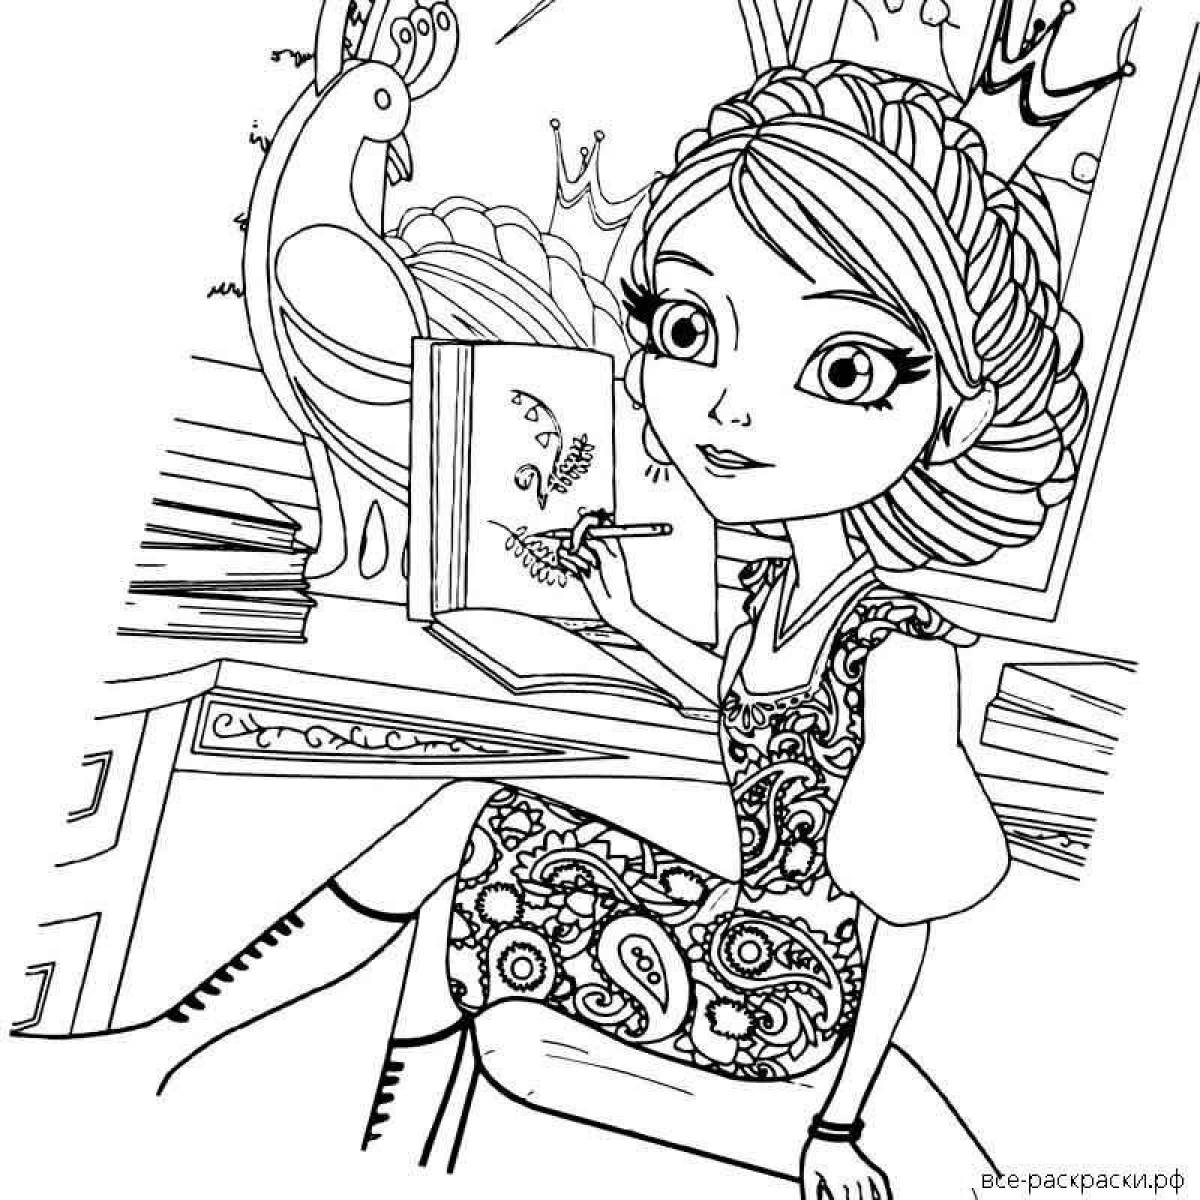 Gorgeous princess coloring book